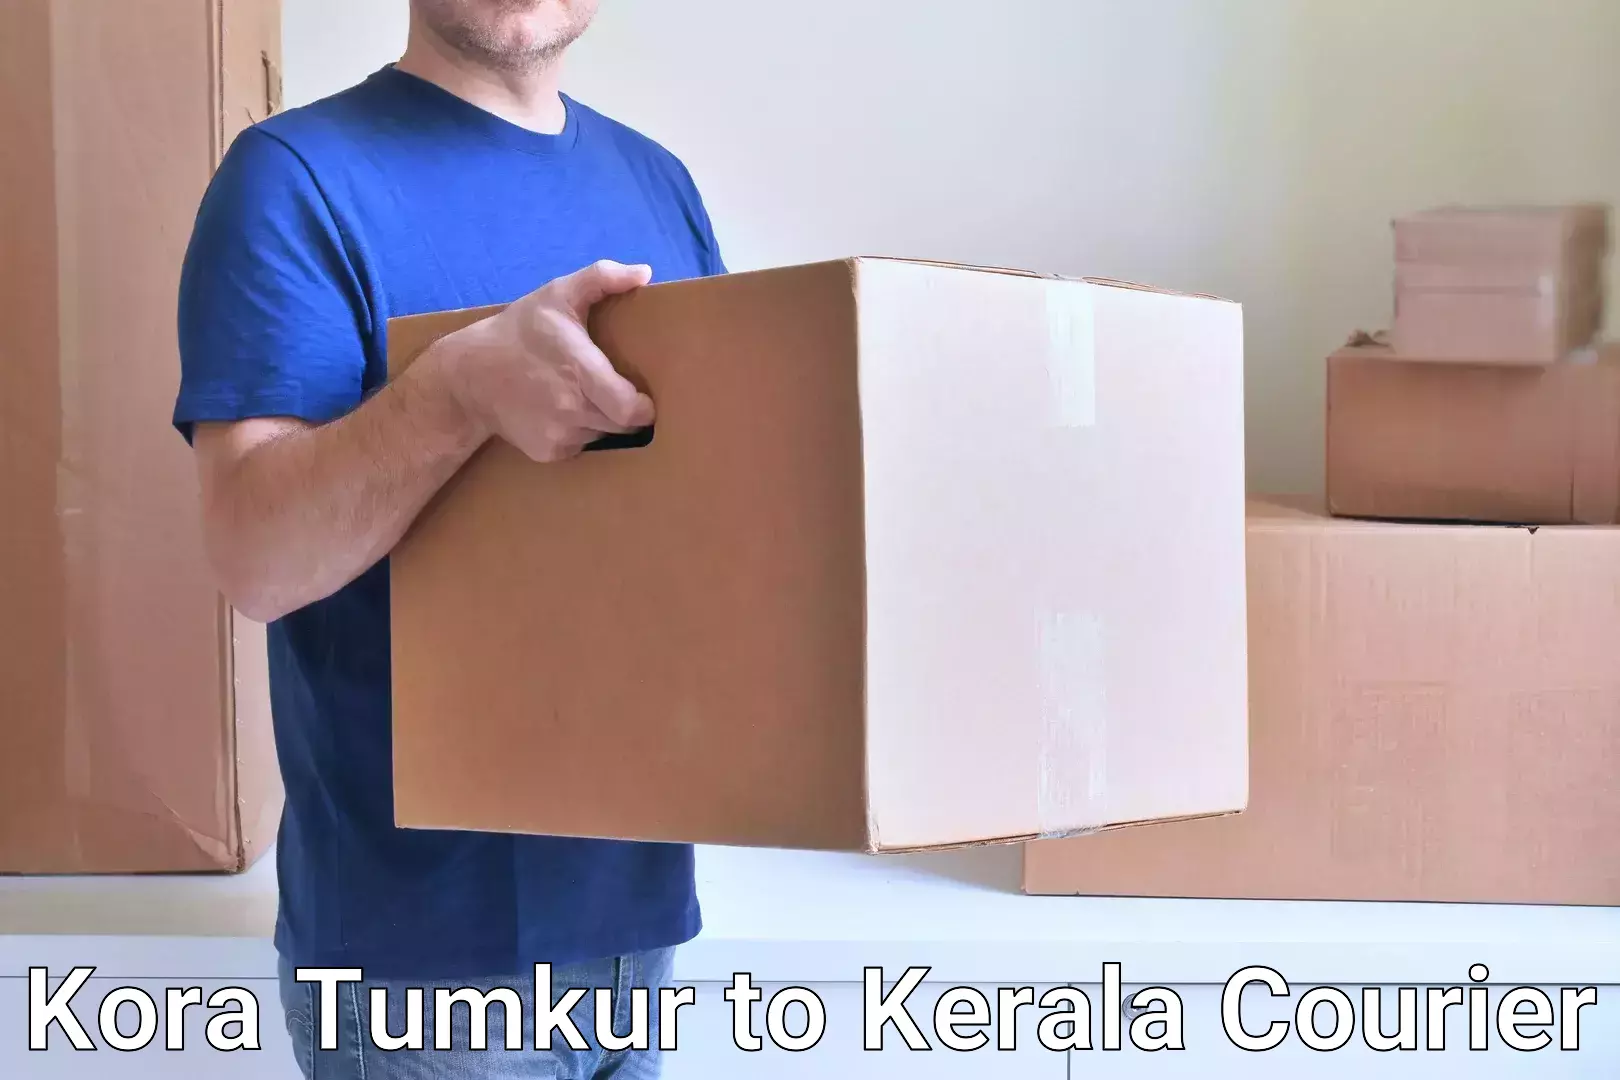 Supply chain delivery Kora Tumkur to Kerala